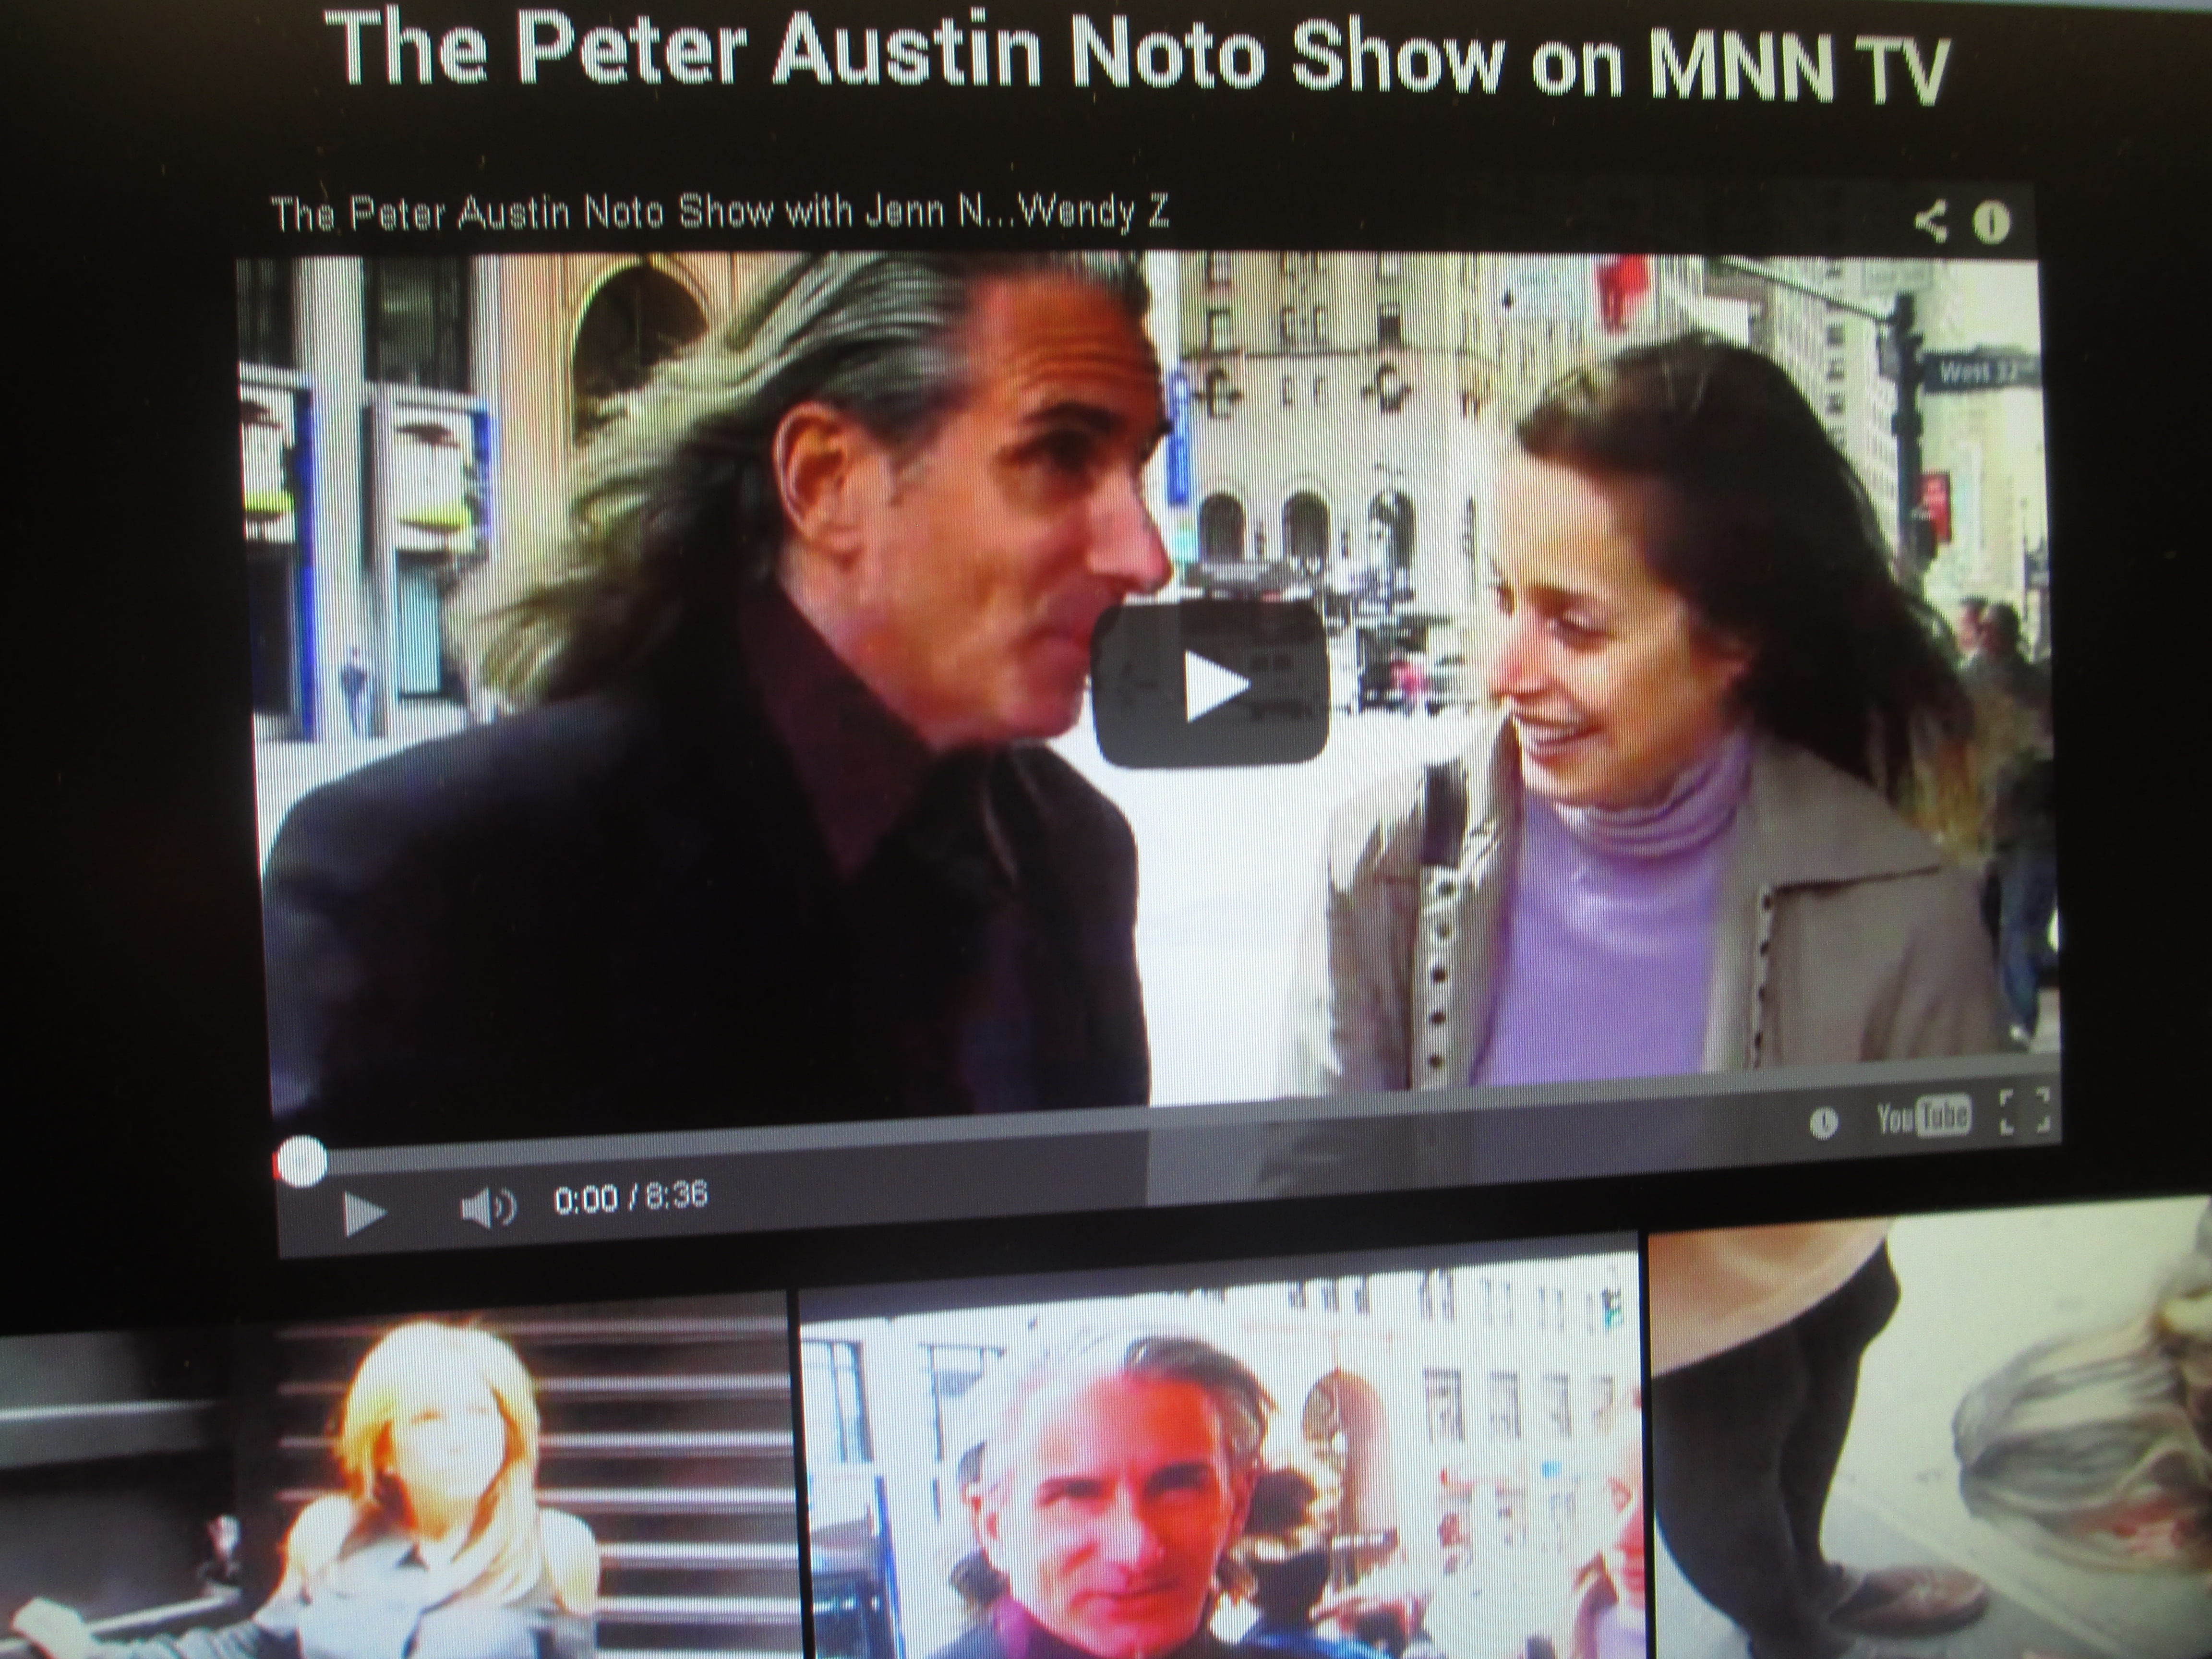 Florida is warm Peter Peter Austin Noto lost Jennifer Nuccitelli in Florida On The Peter Austin Noto Show